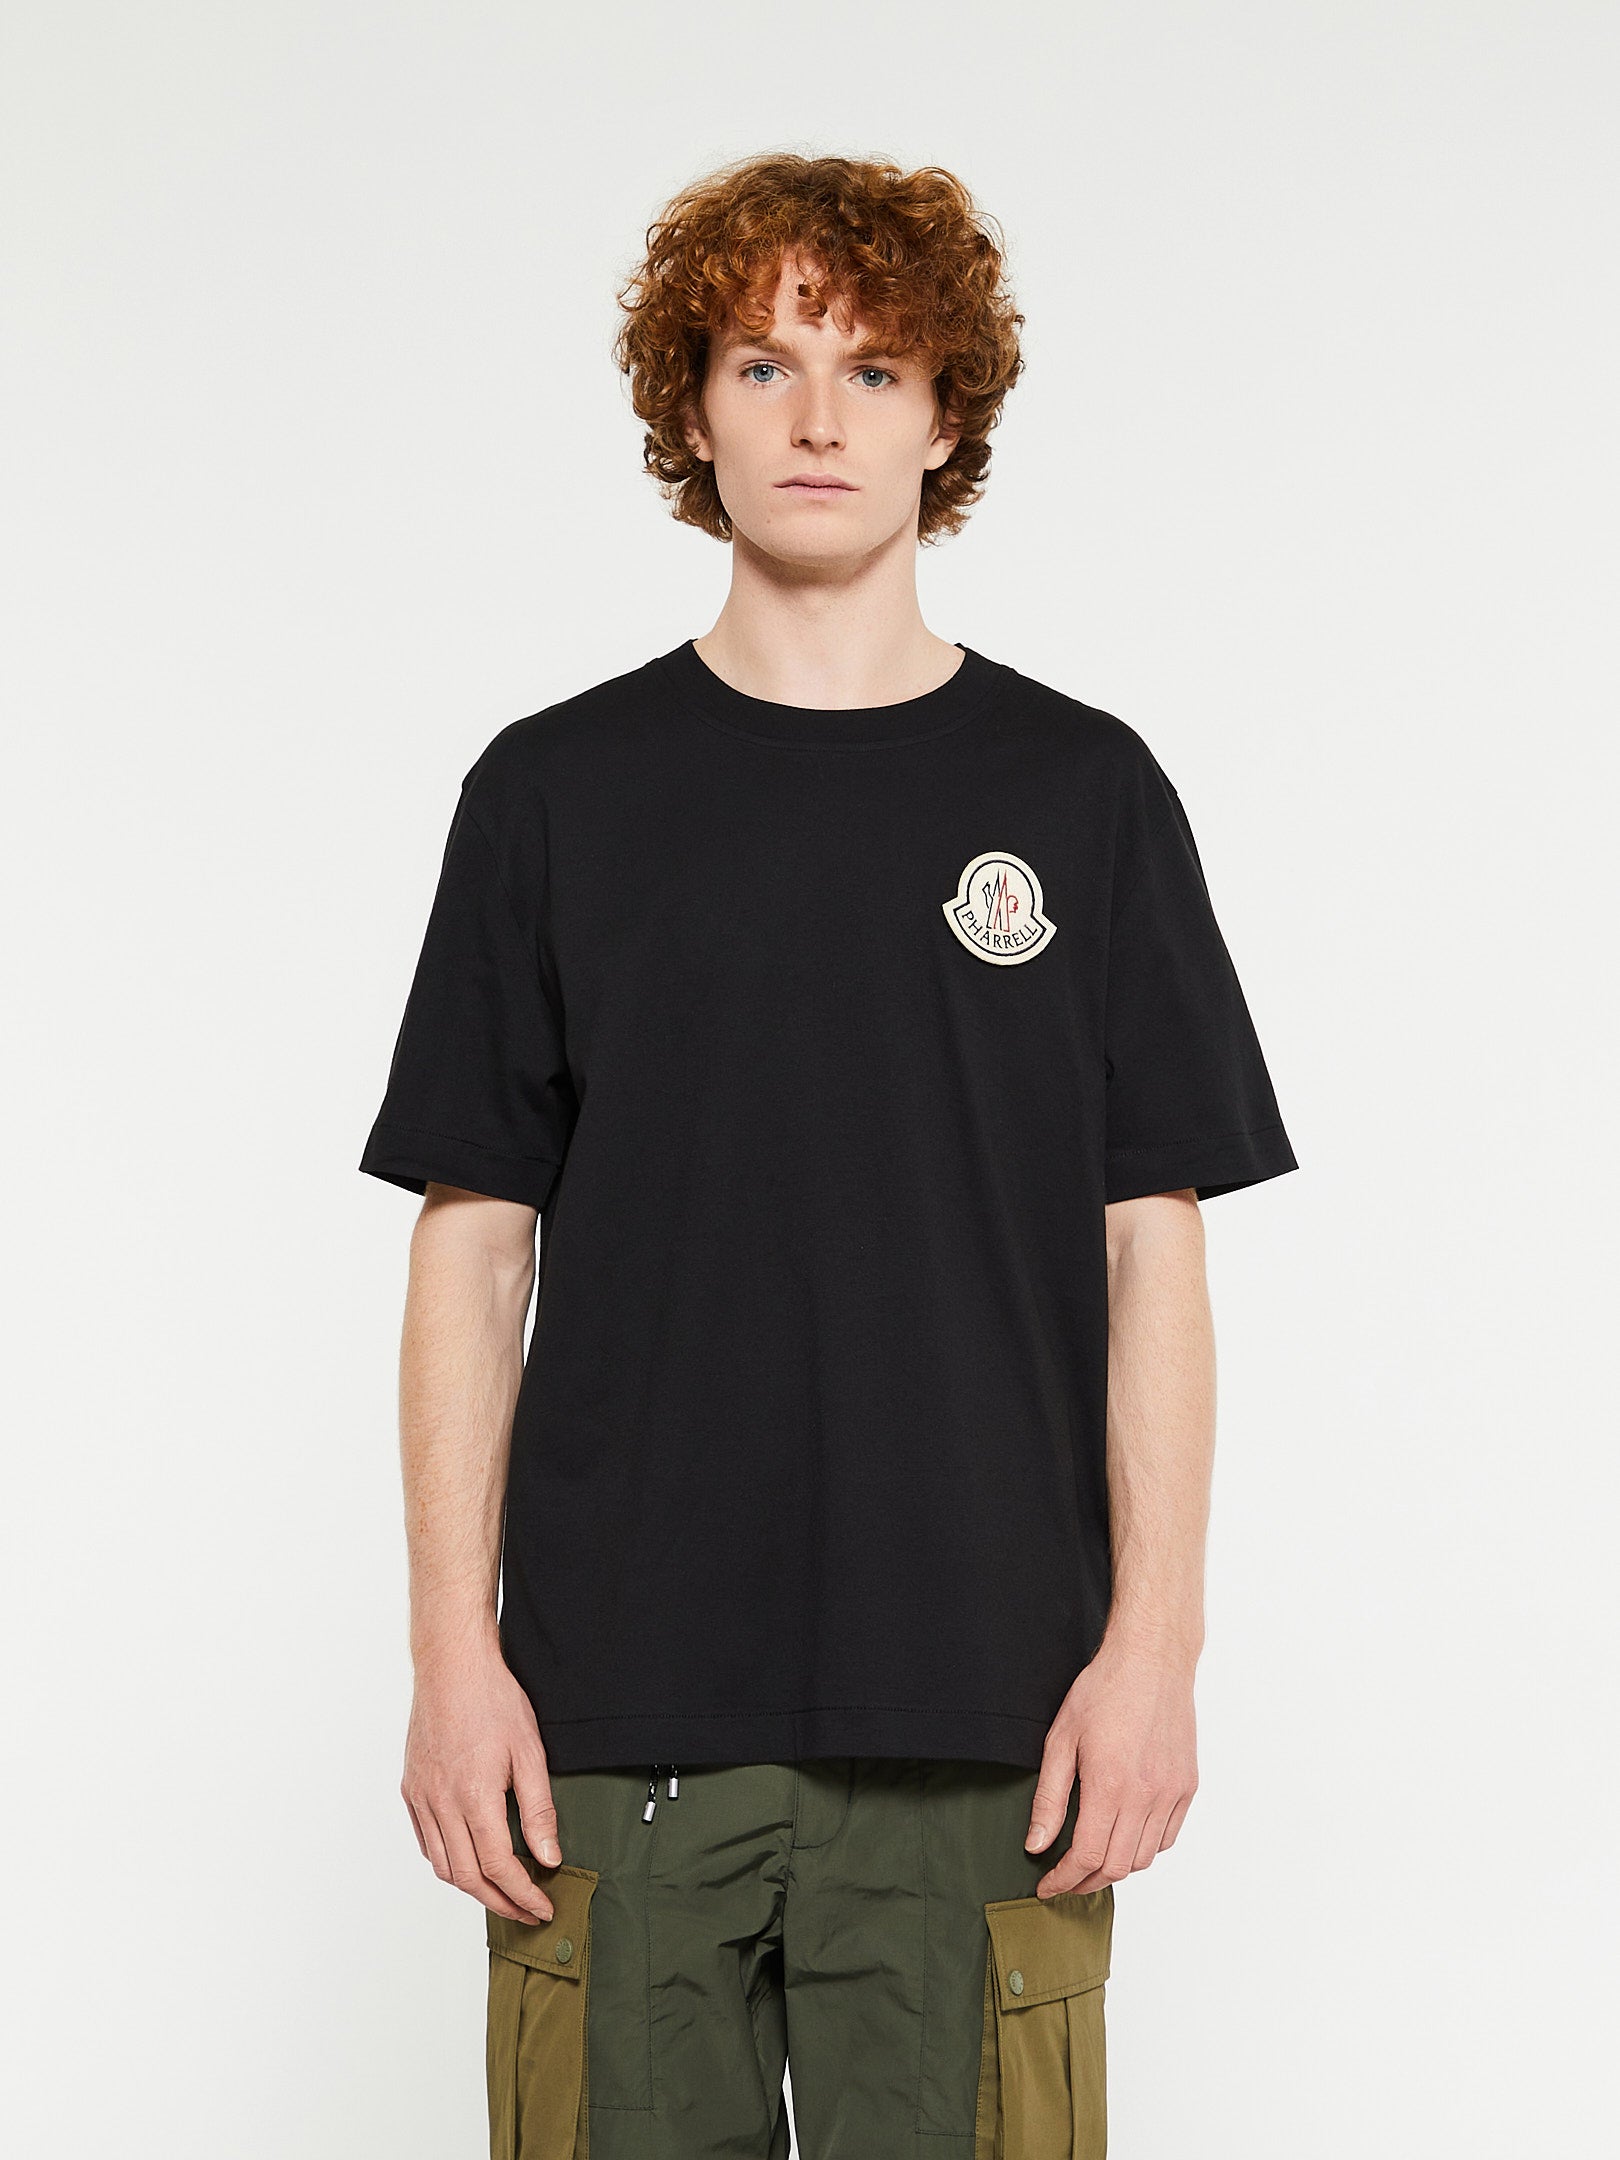 Moncler Genius x Pharrell Williams - Logo Patch T-shirt in Black